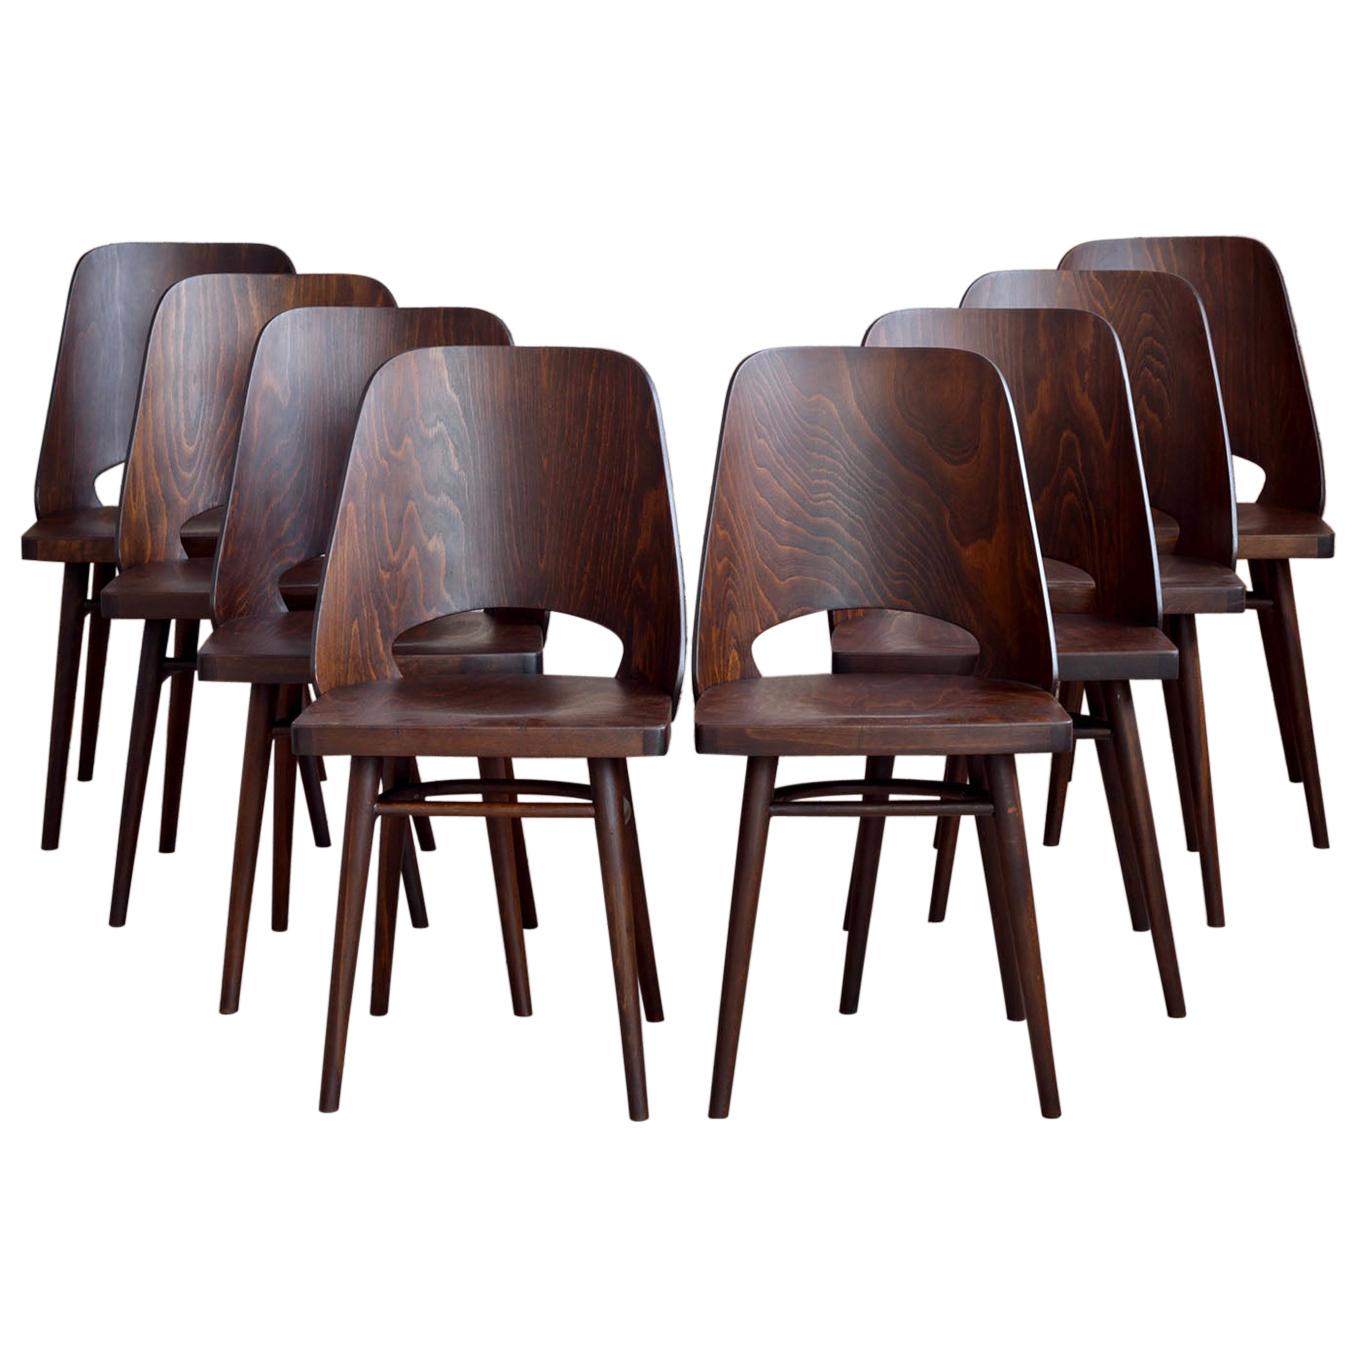 Set of 8 Chairs by Oswald Haerdtl, Beech Veneer, Oil Finish